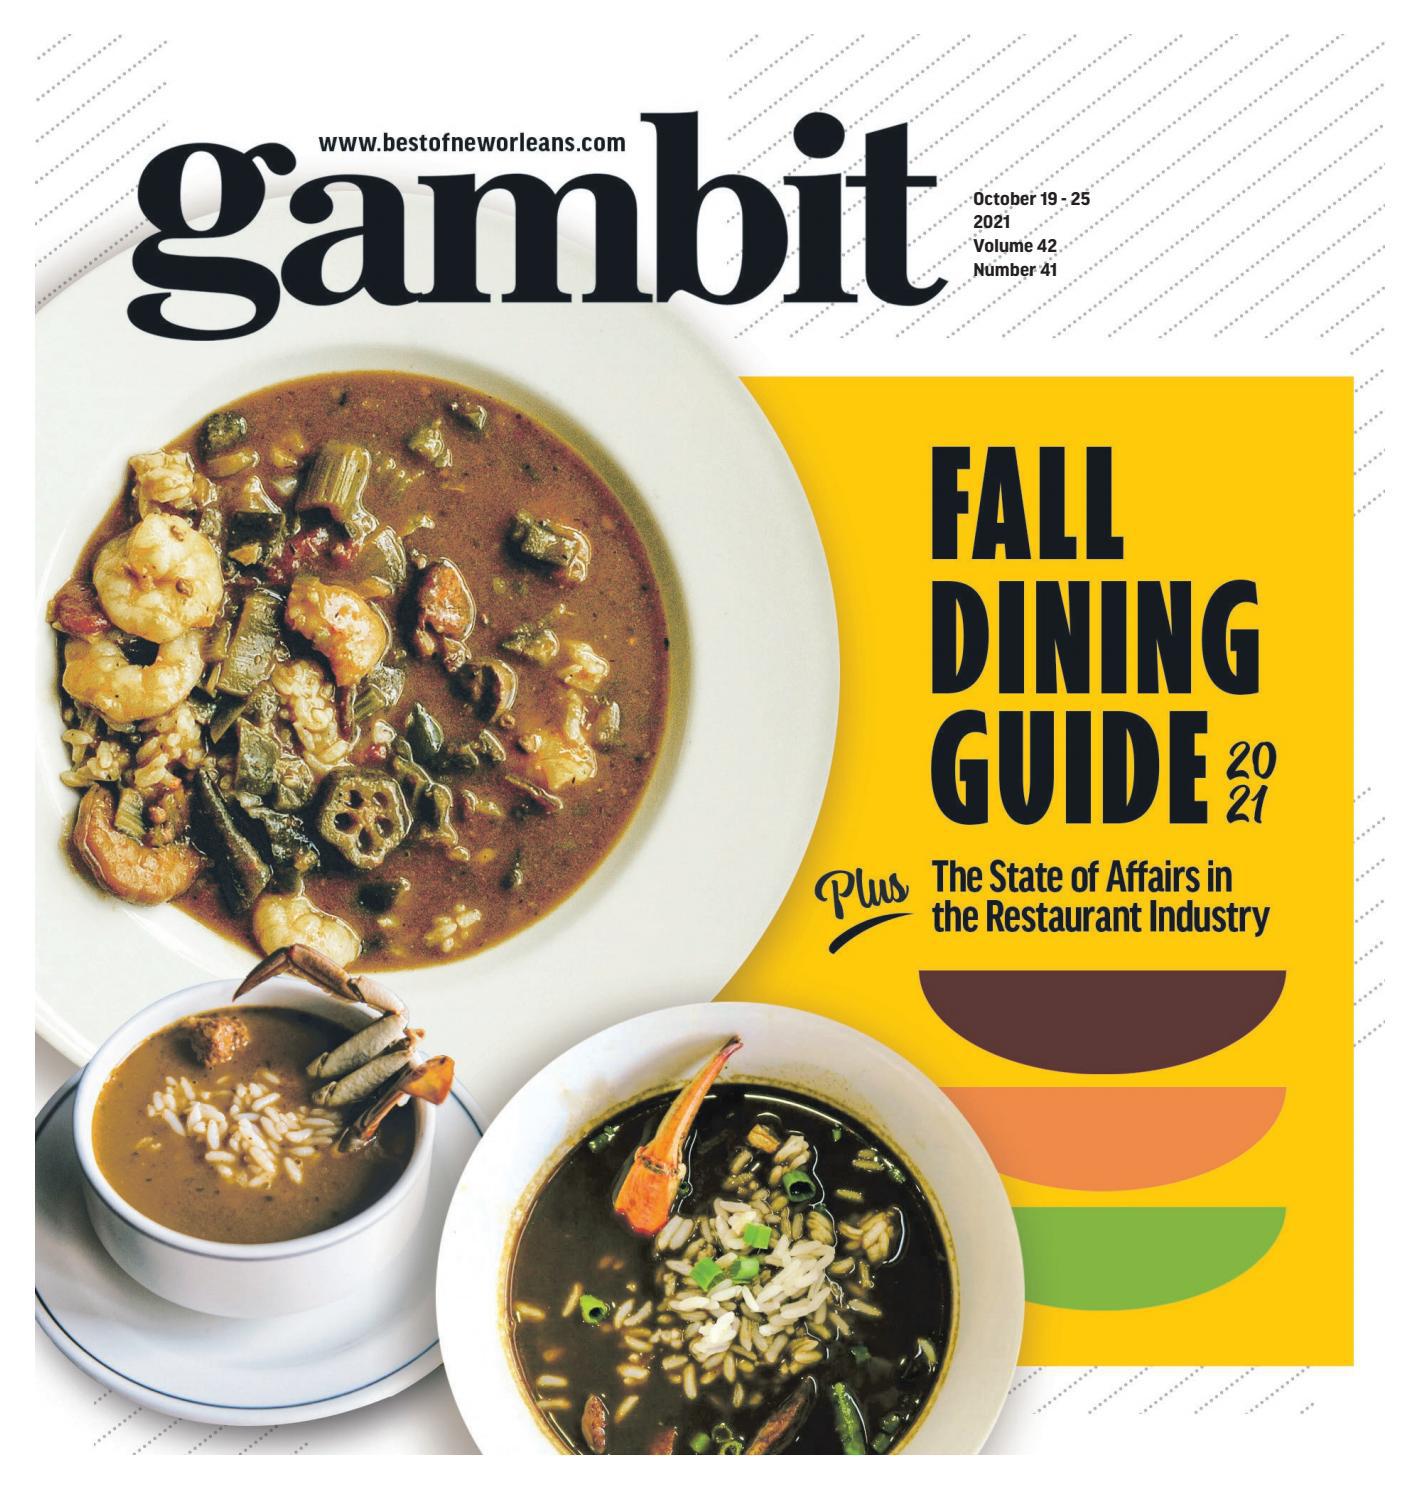 Gambit magazine October 19-25 2021, volume 42, number 41